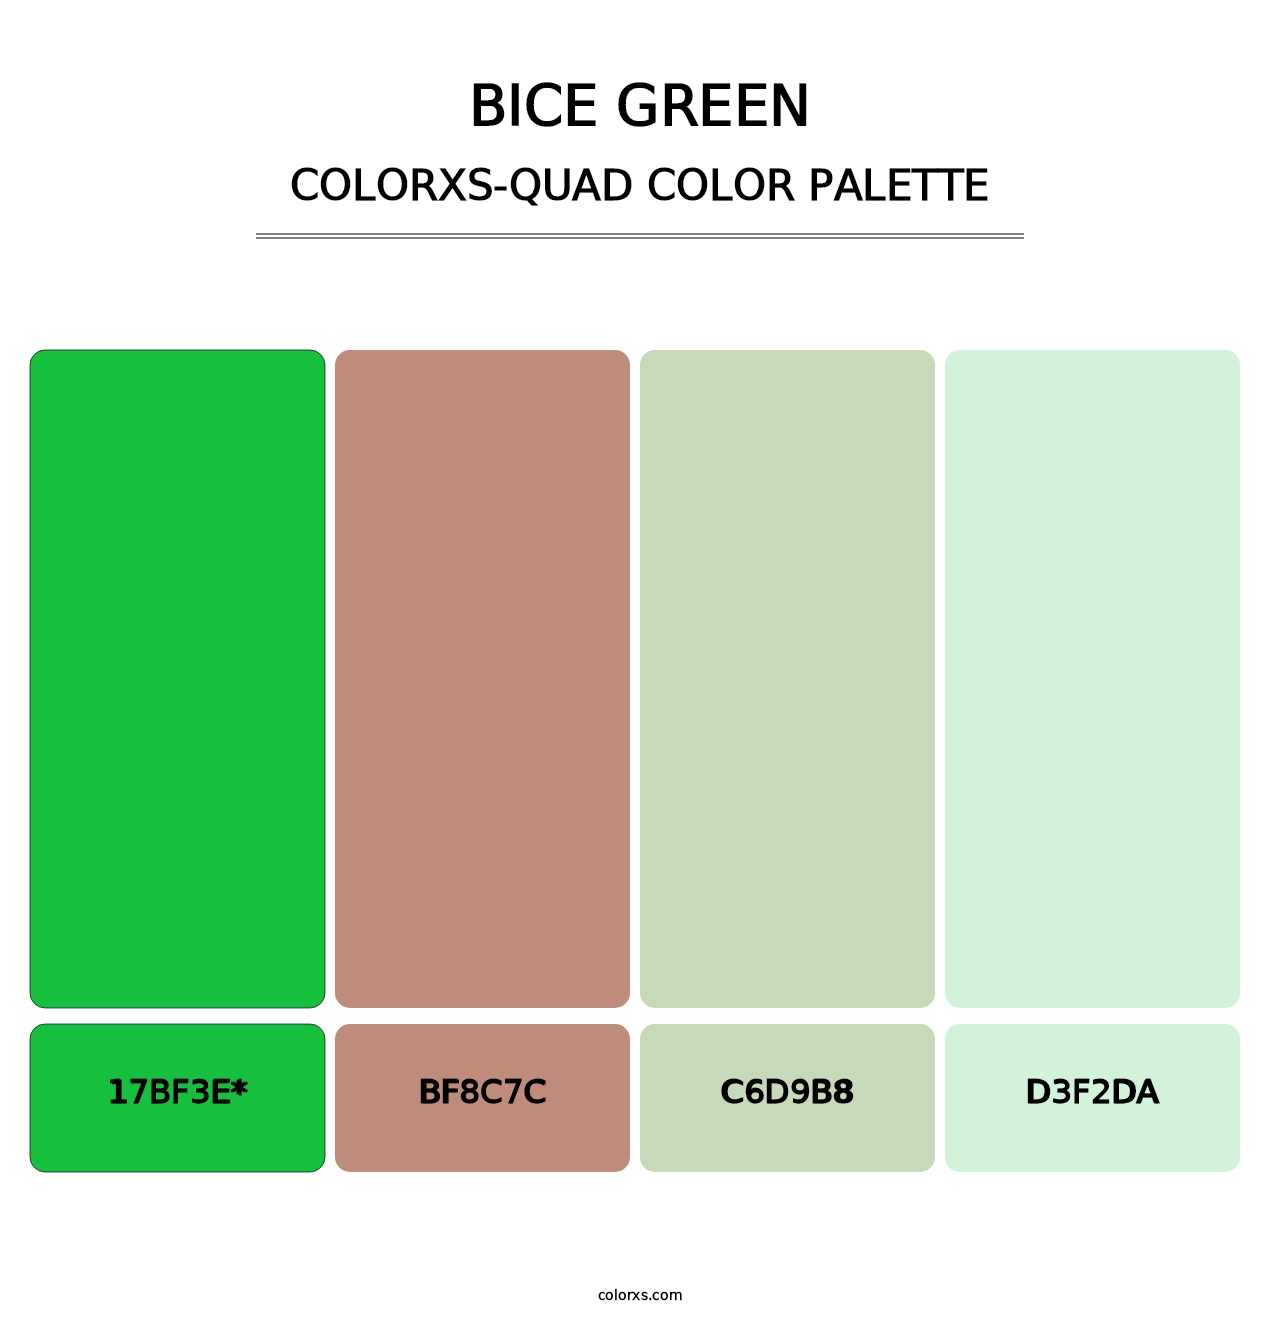 Bice Green - Colorxs Quad Palette